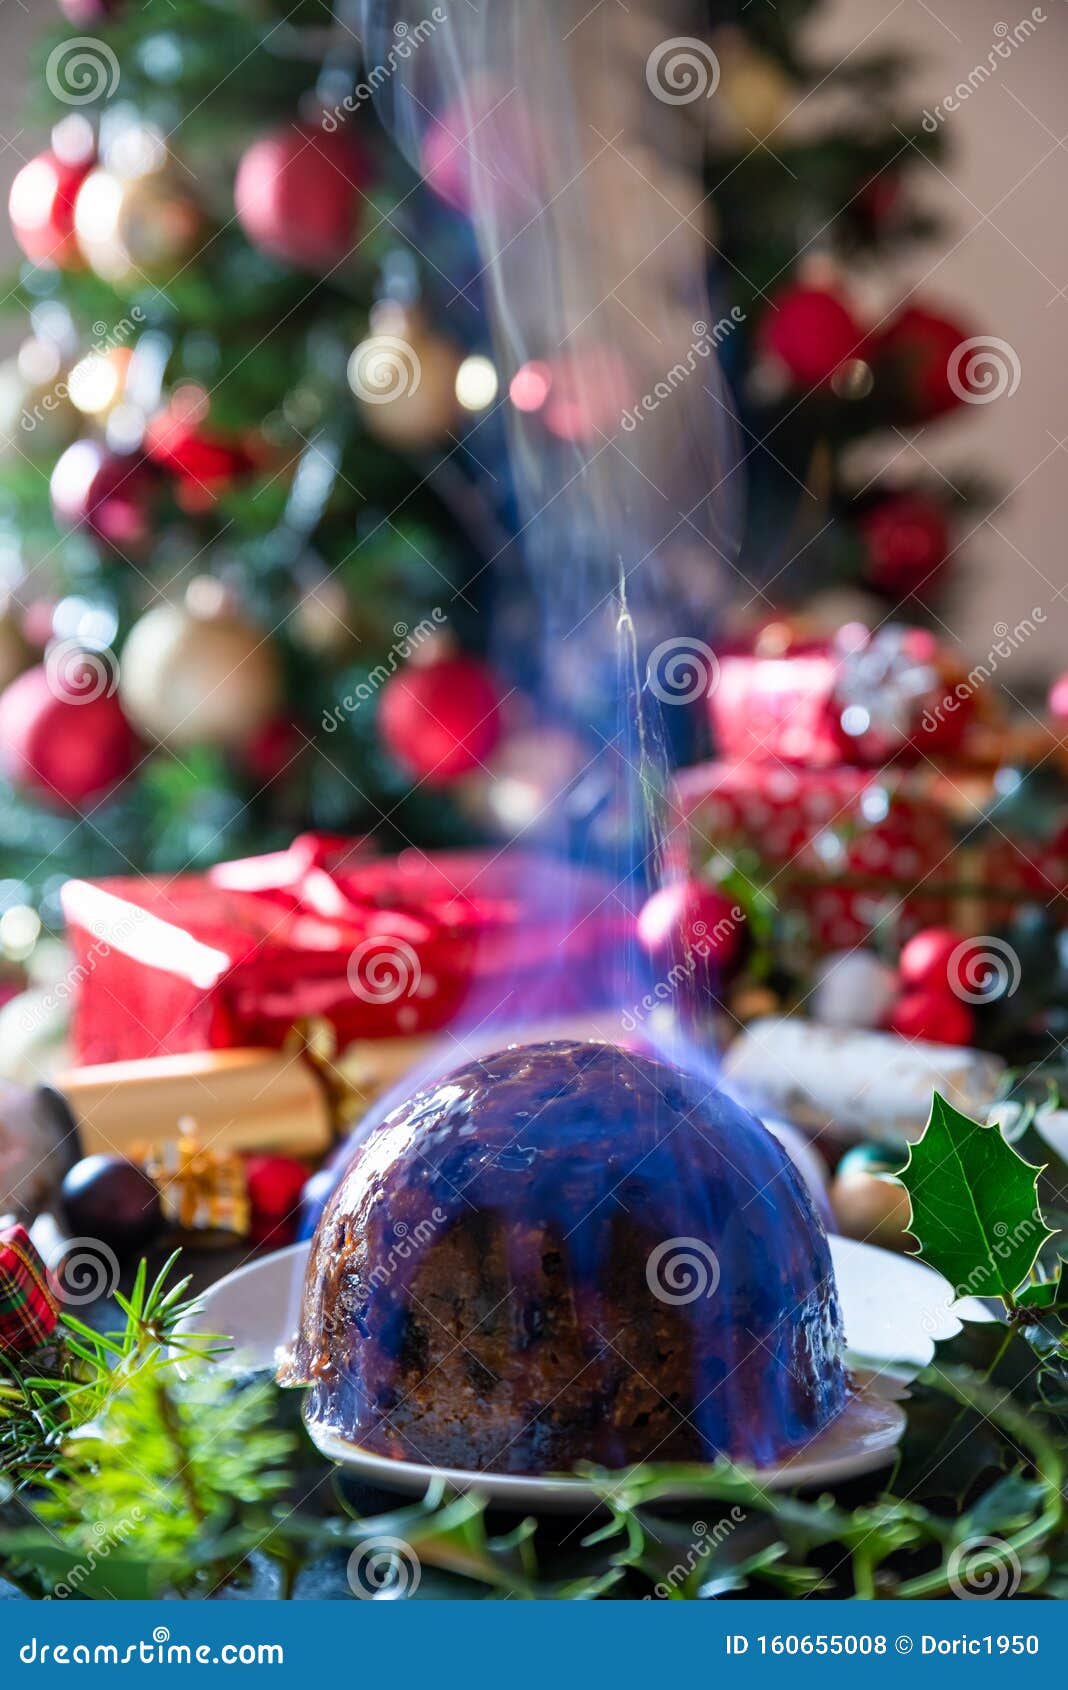 Flaming Christmas Pudding stock photo. Image of color - 160655008